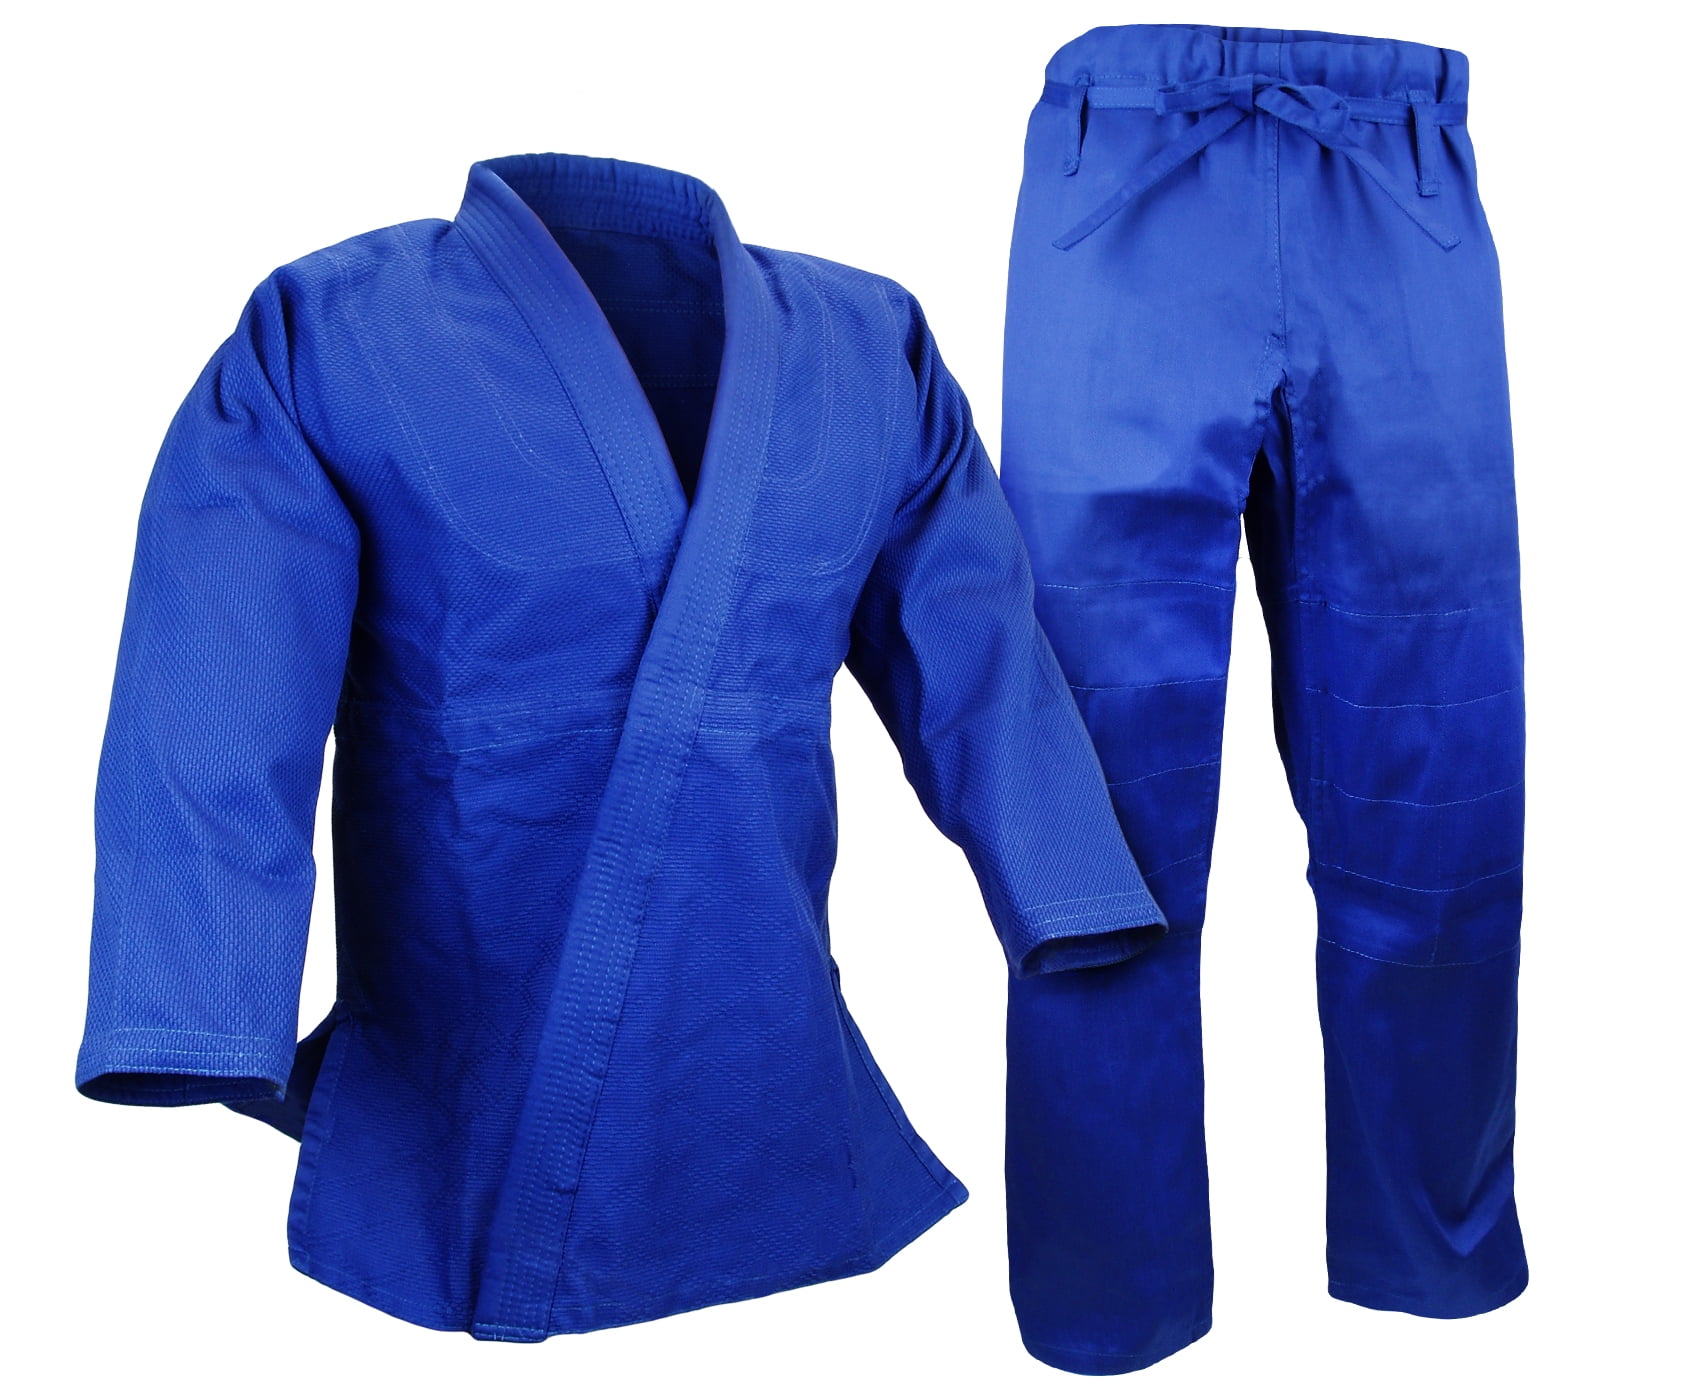 MACS Double Weave Traditinal Judo Kimono Uniform for Kids & Adults Size 0 to 8 